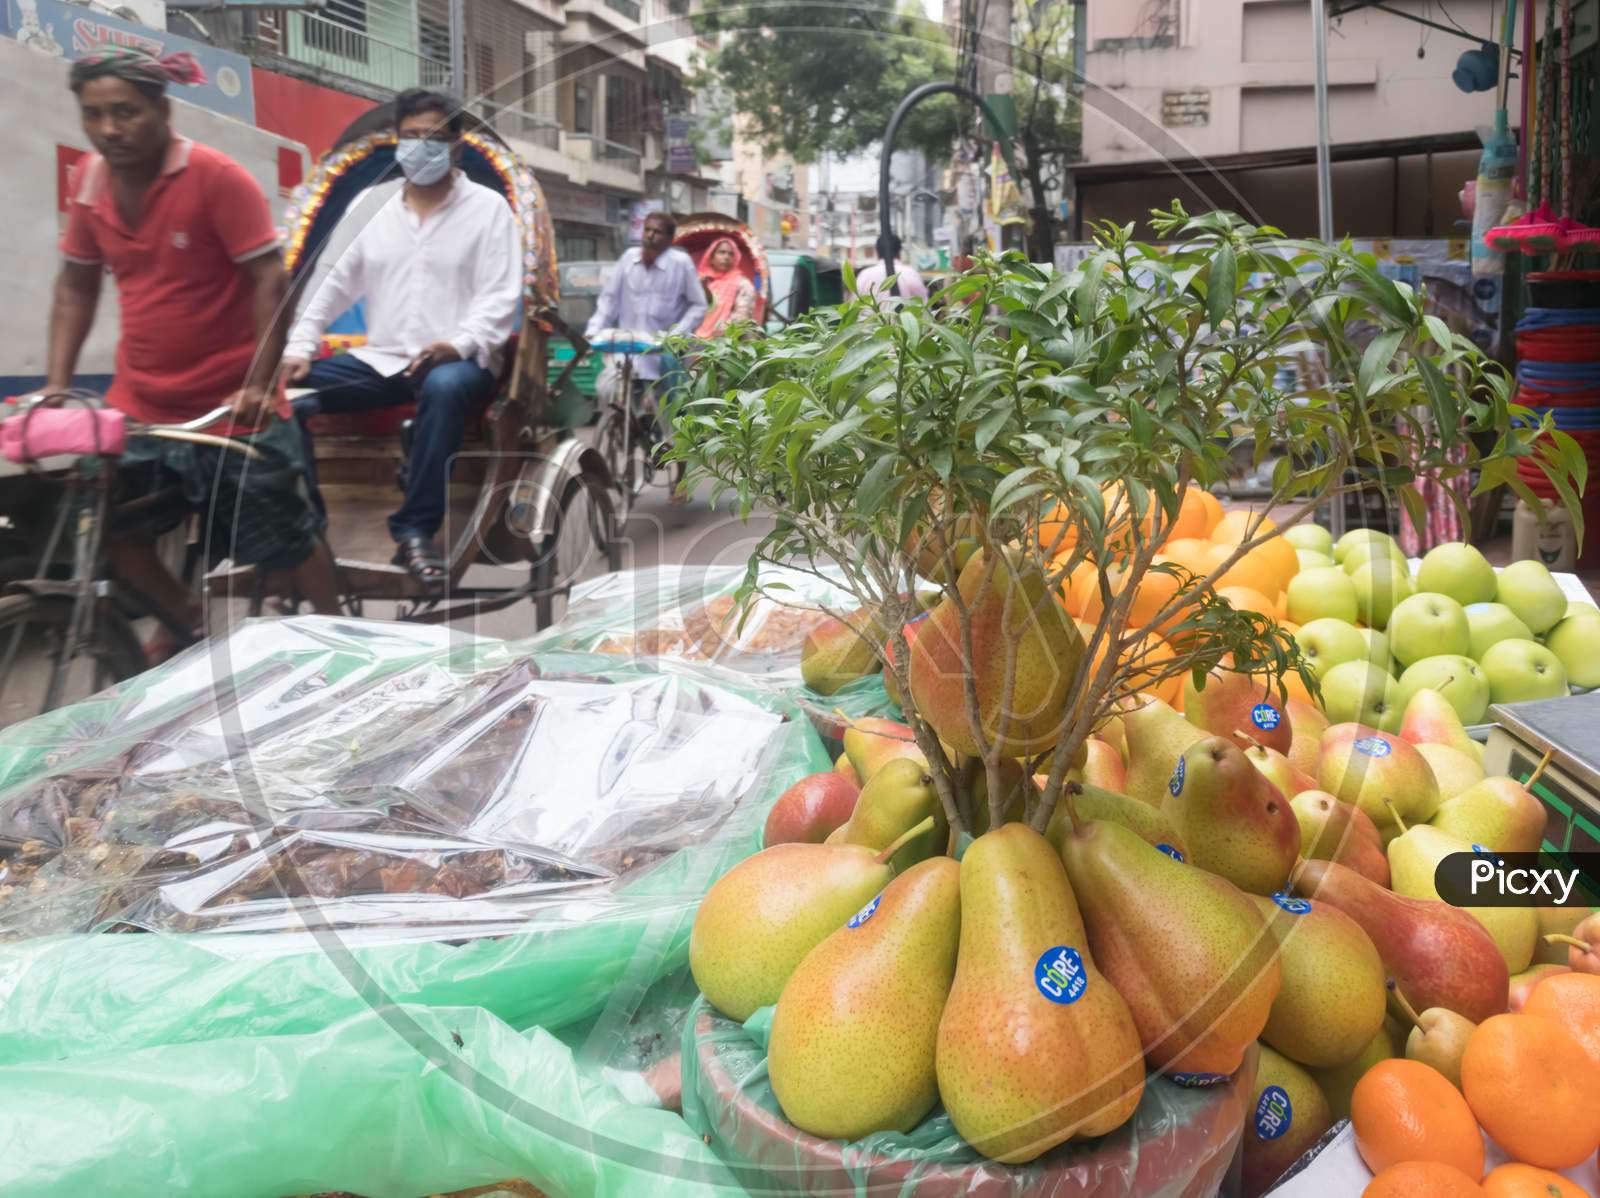 Fruits of Asia and rickshaw passing away